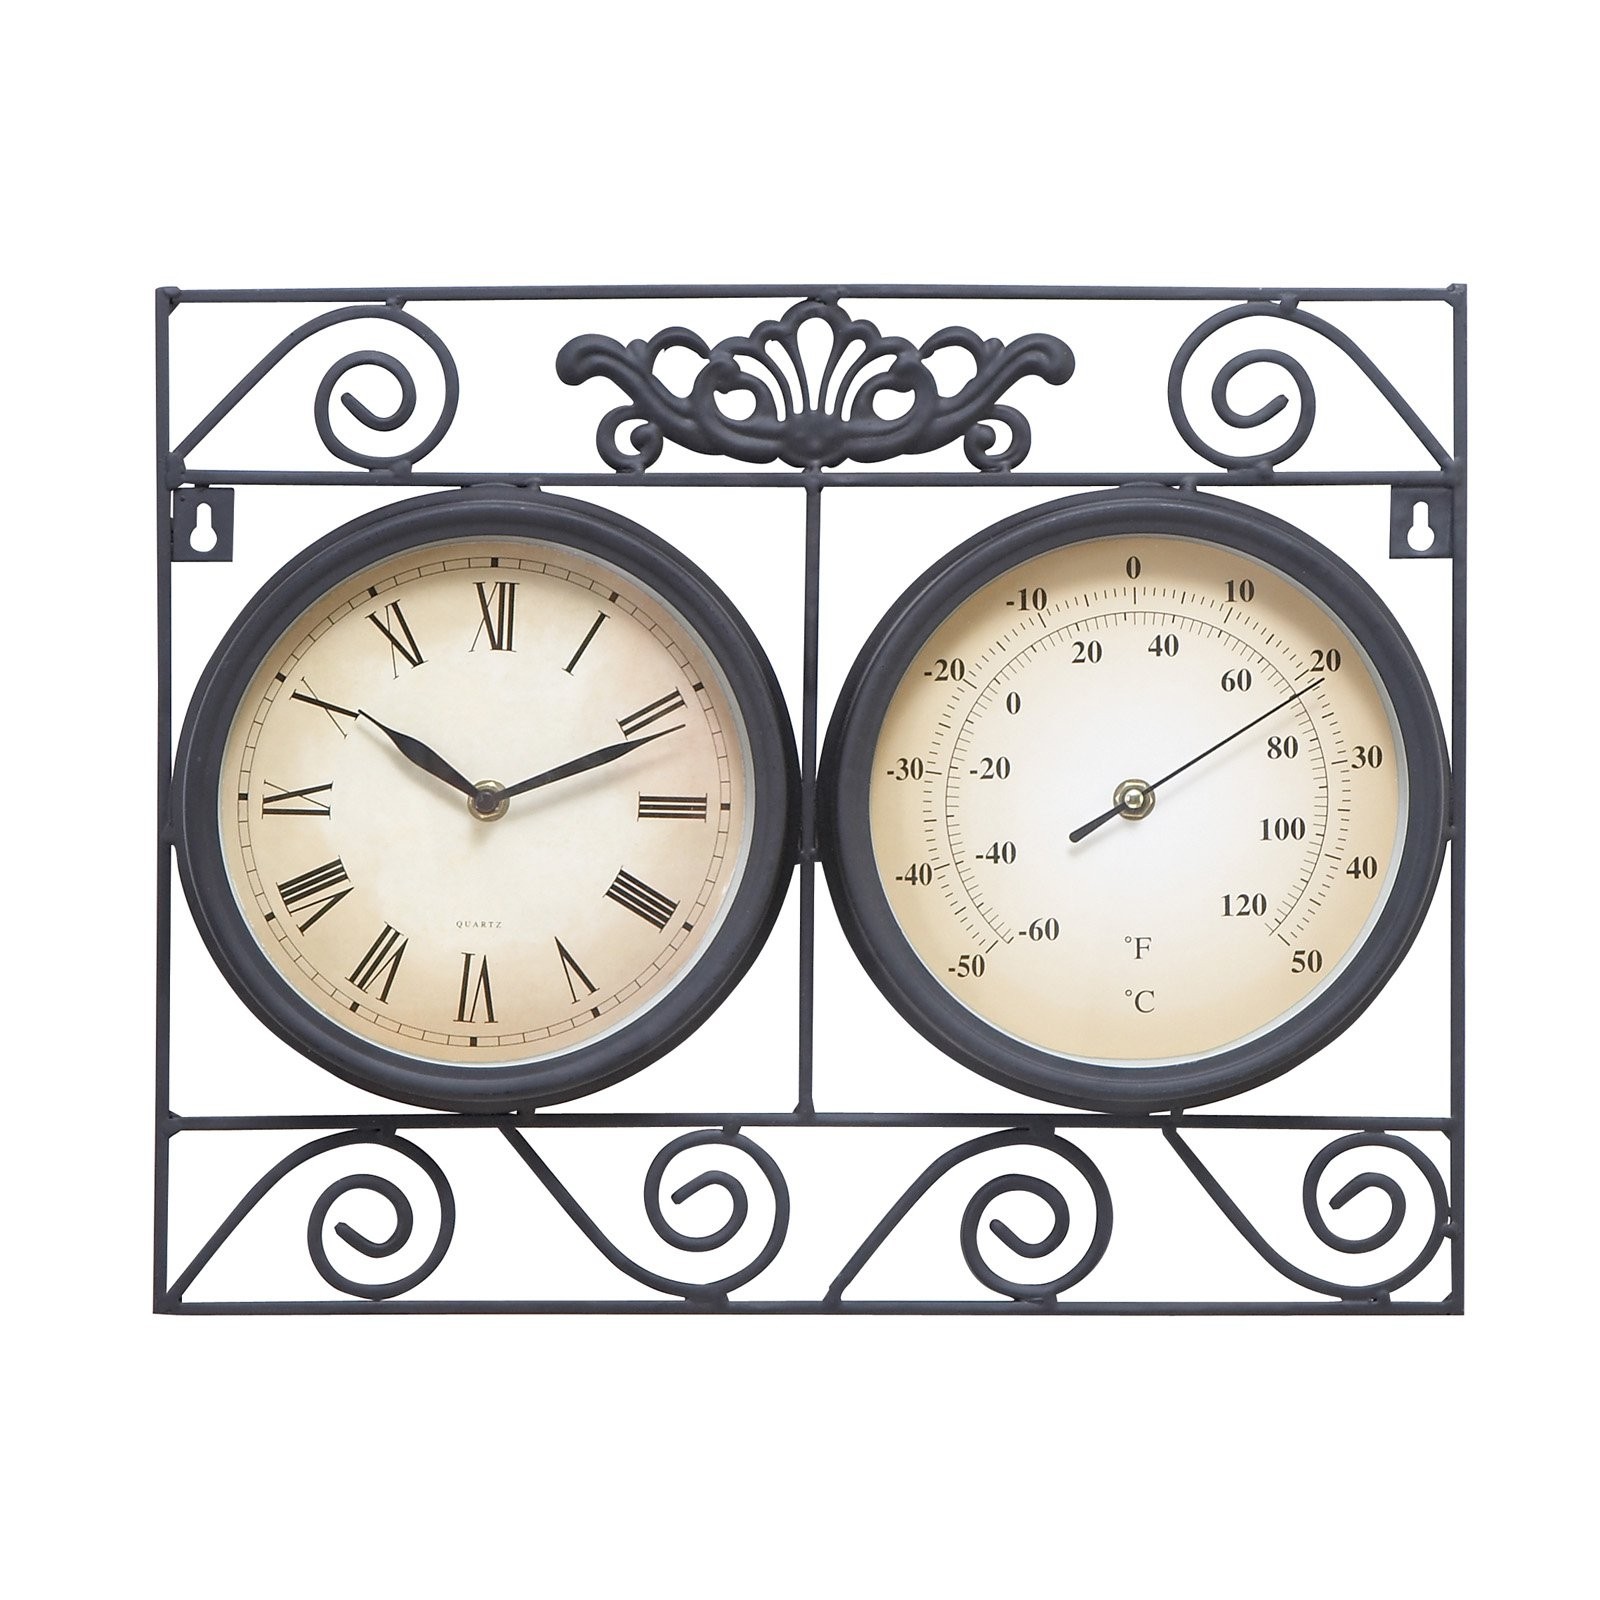 Iana indooroutdoor wall clock thermometer